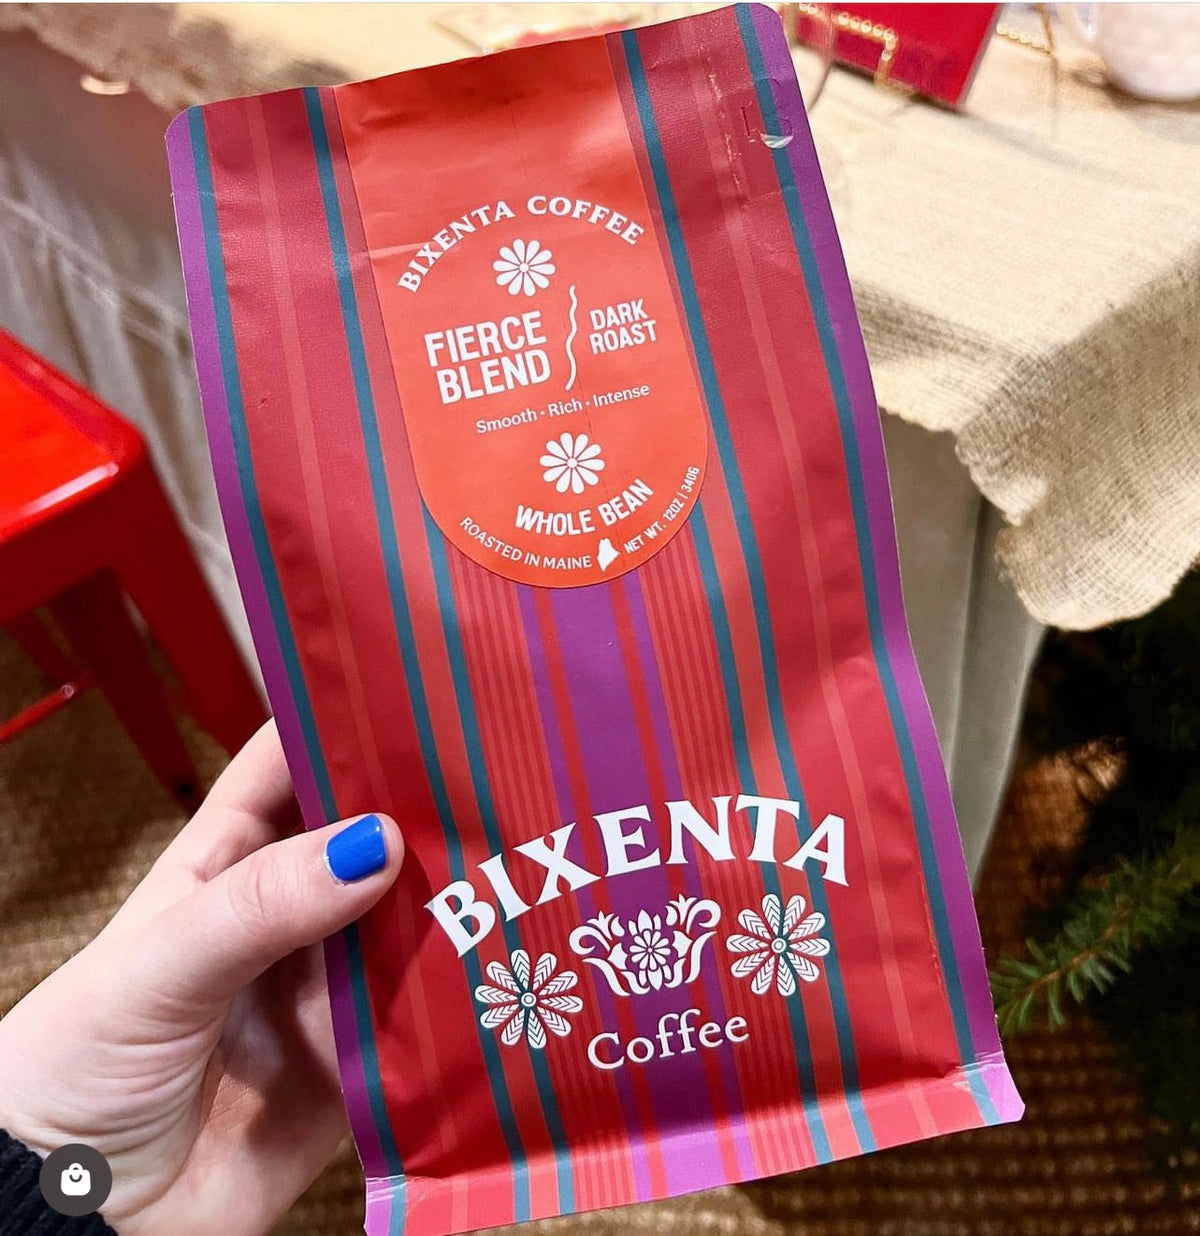 Bixenta Coffee Fierce Blend